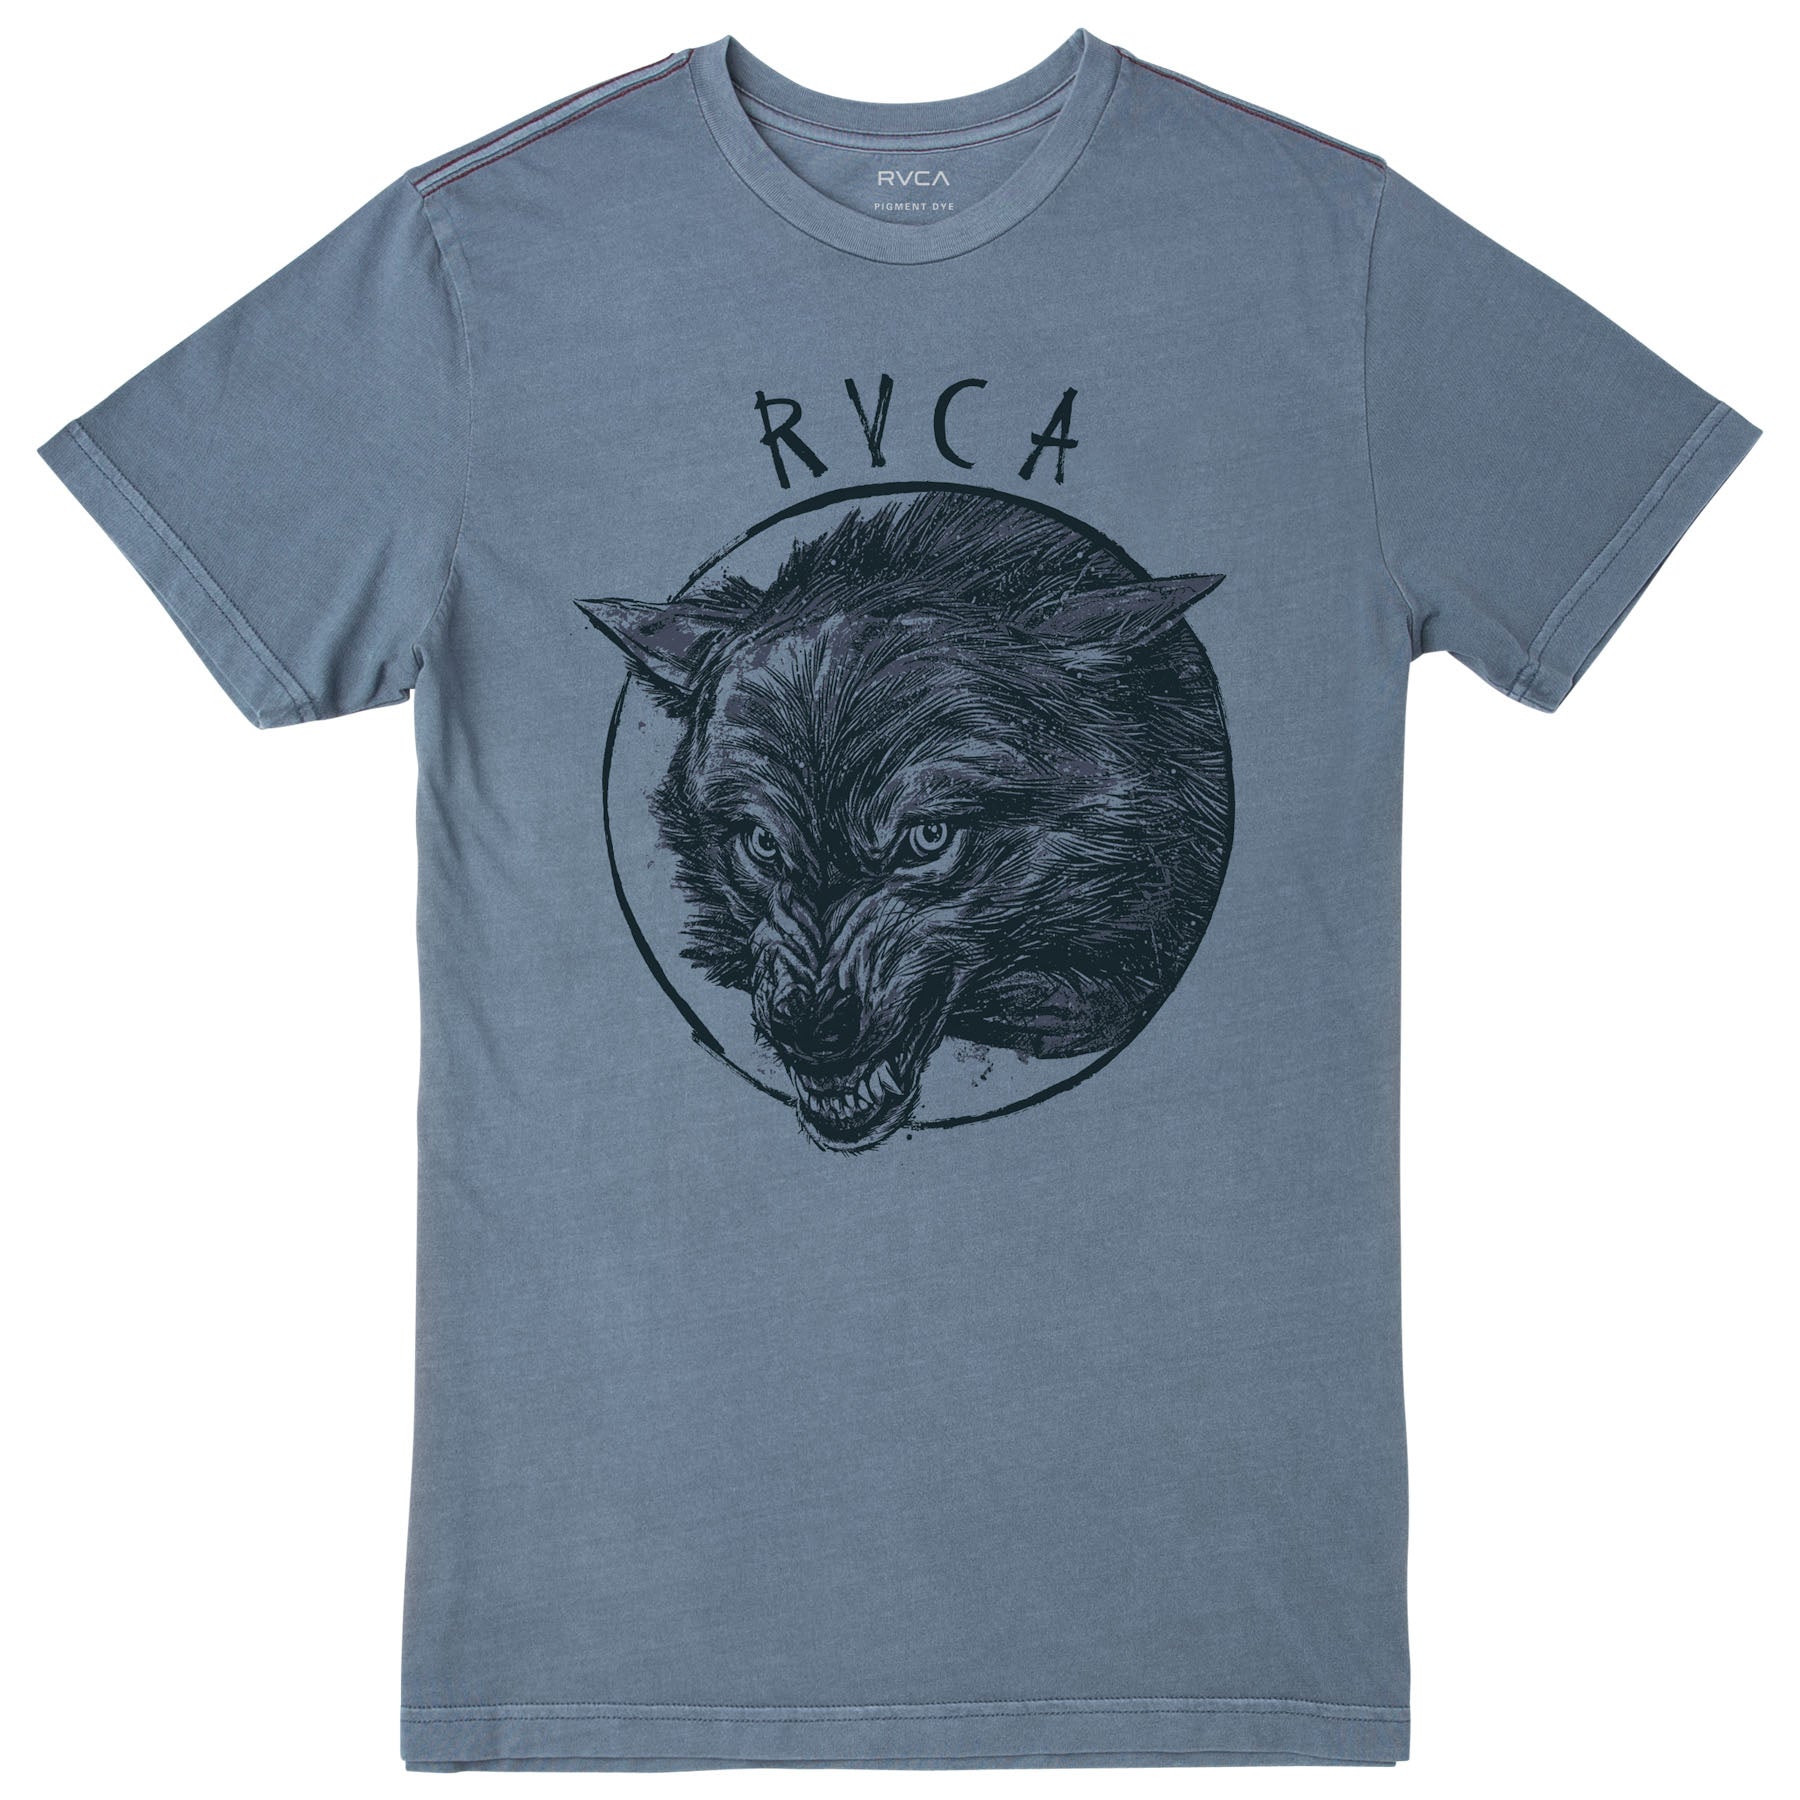 RVCA Snarl Tee Shirt - NO RETURNS Graphic Tee RVCA China Blue Medium 